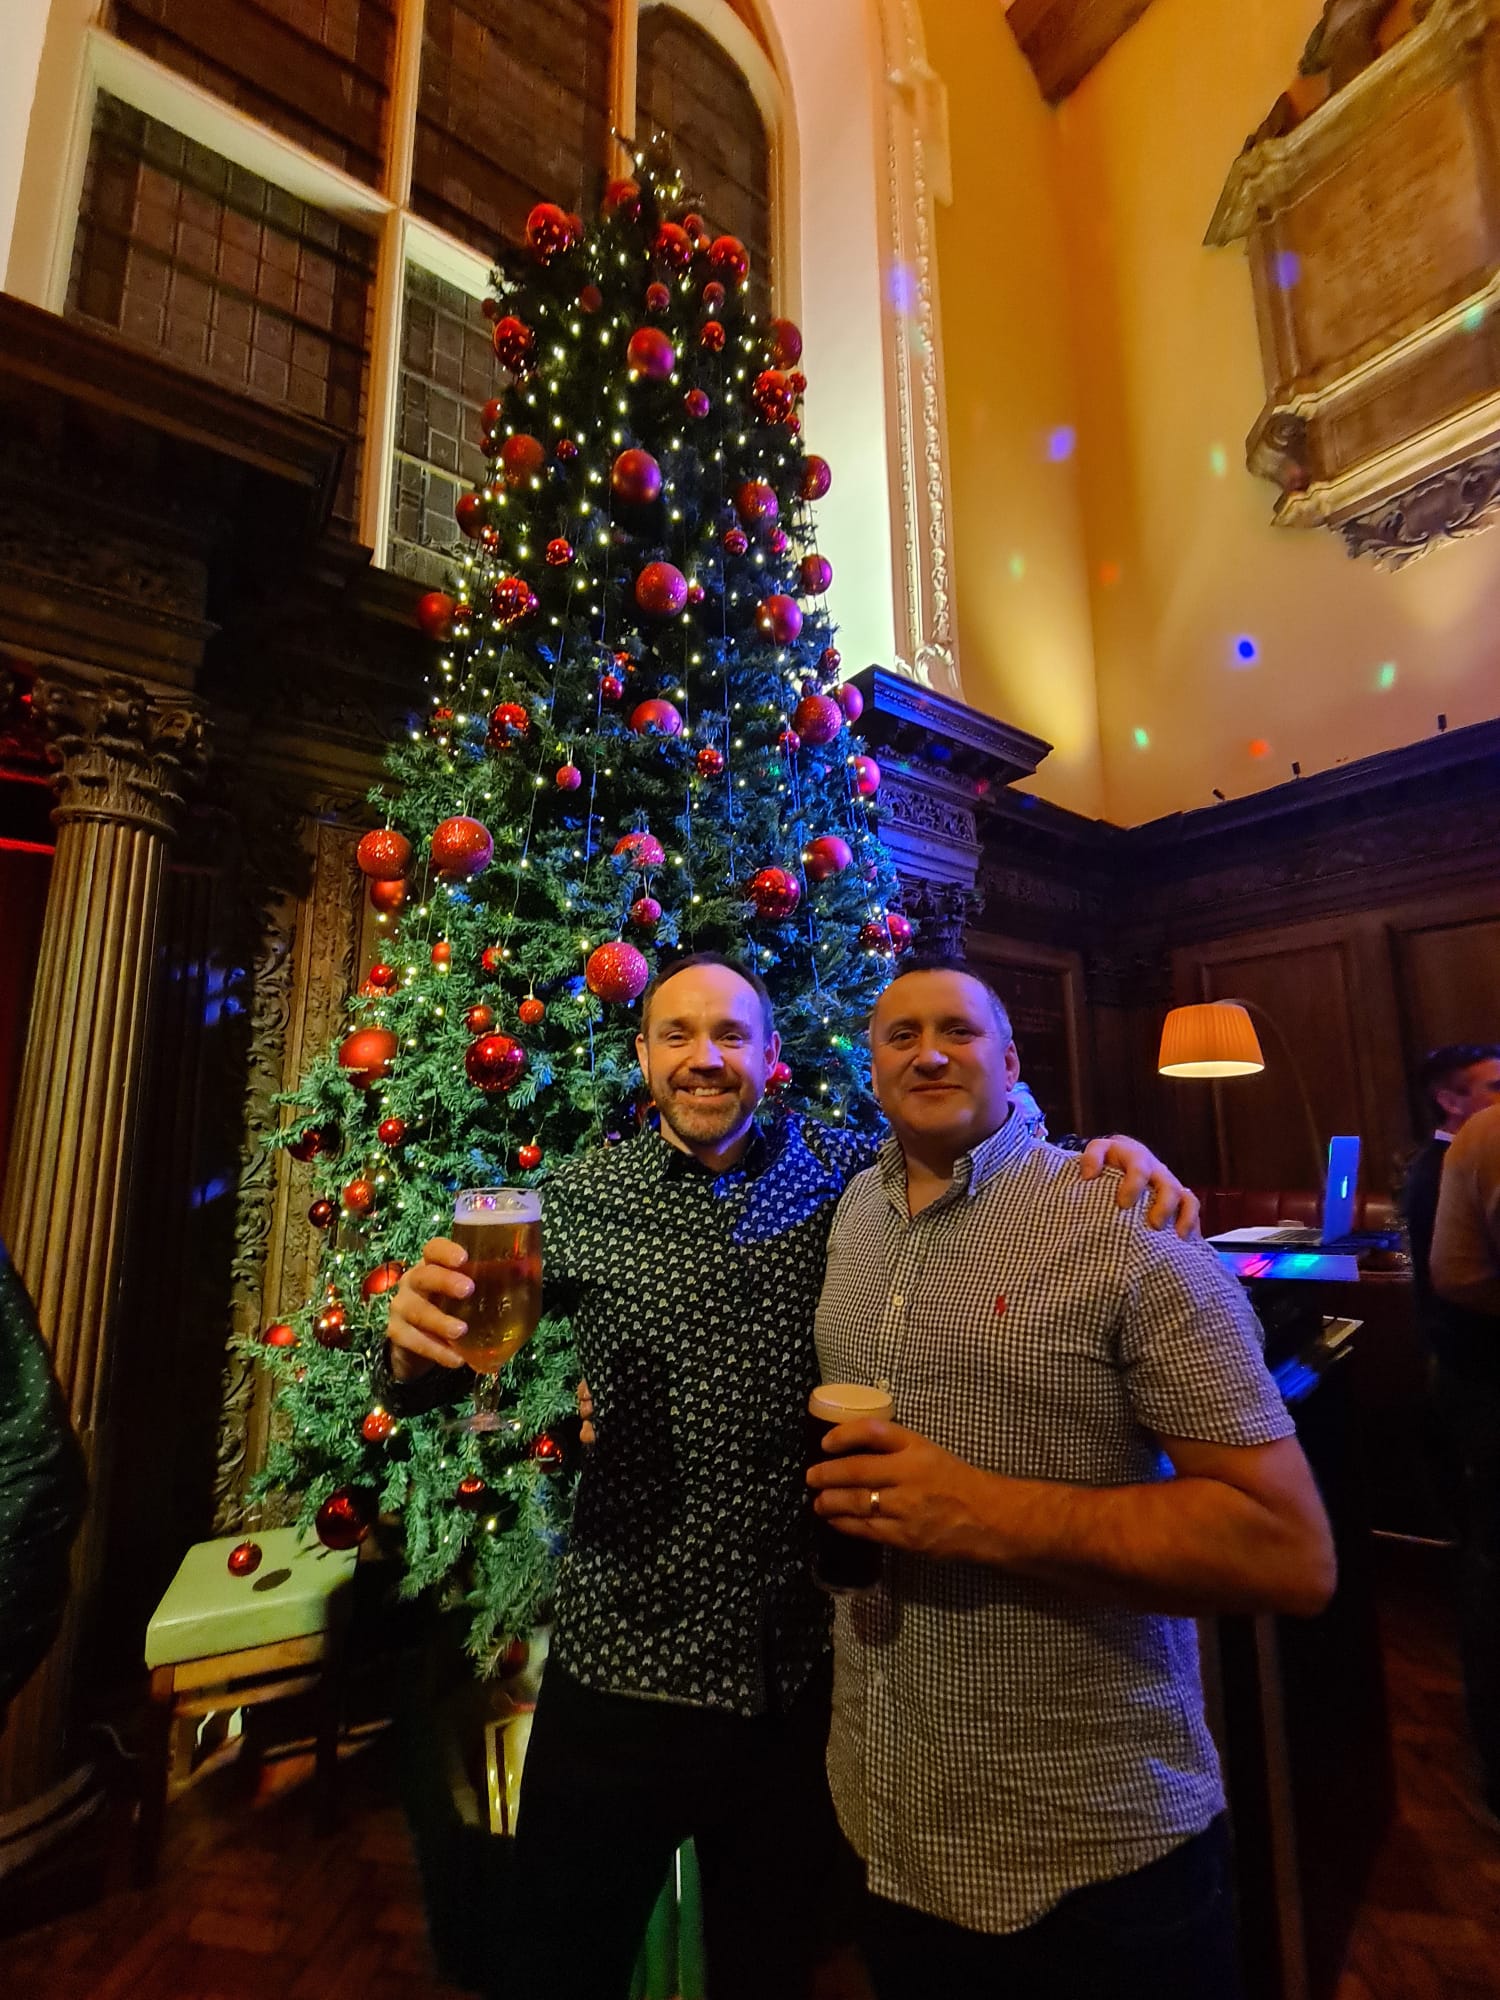 The Northmen beside a Christmas tree